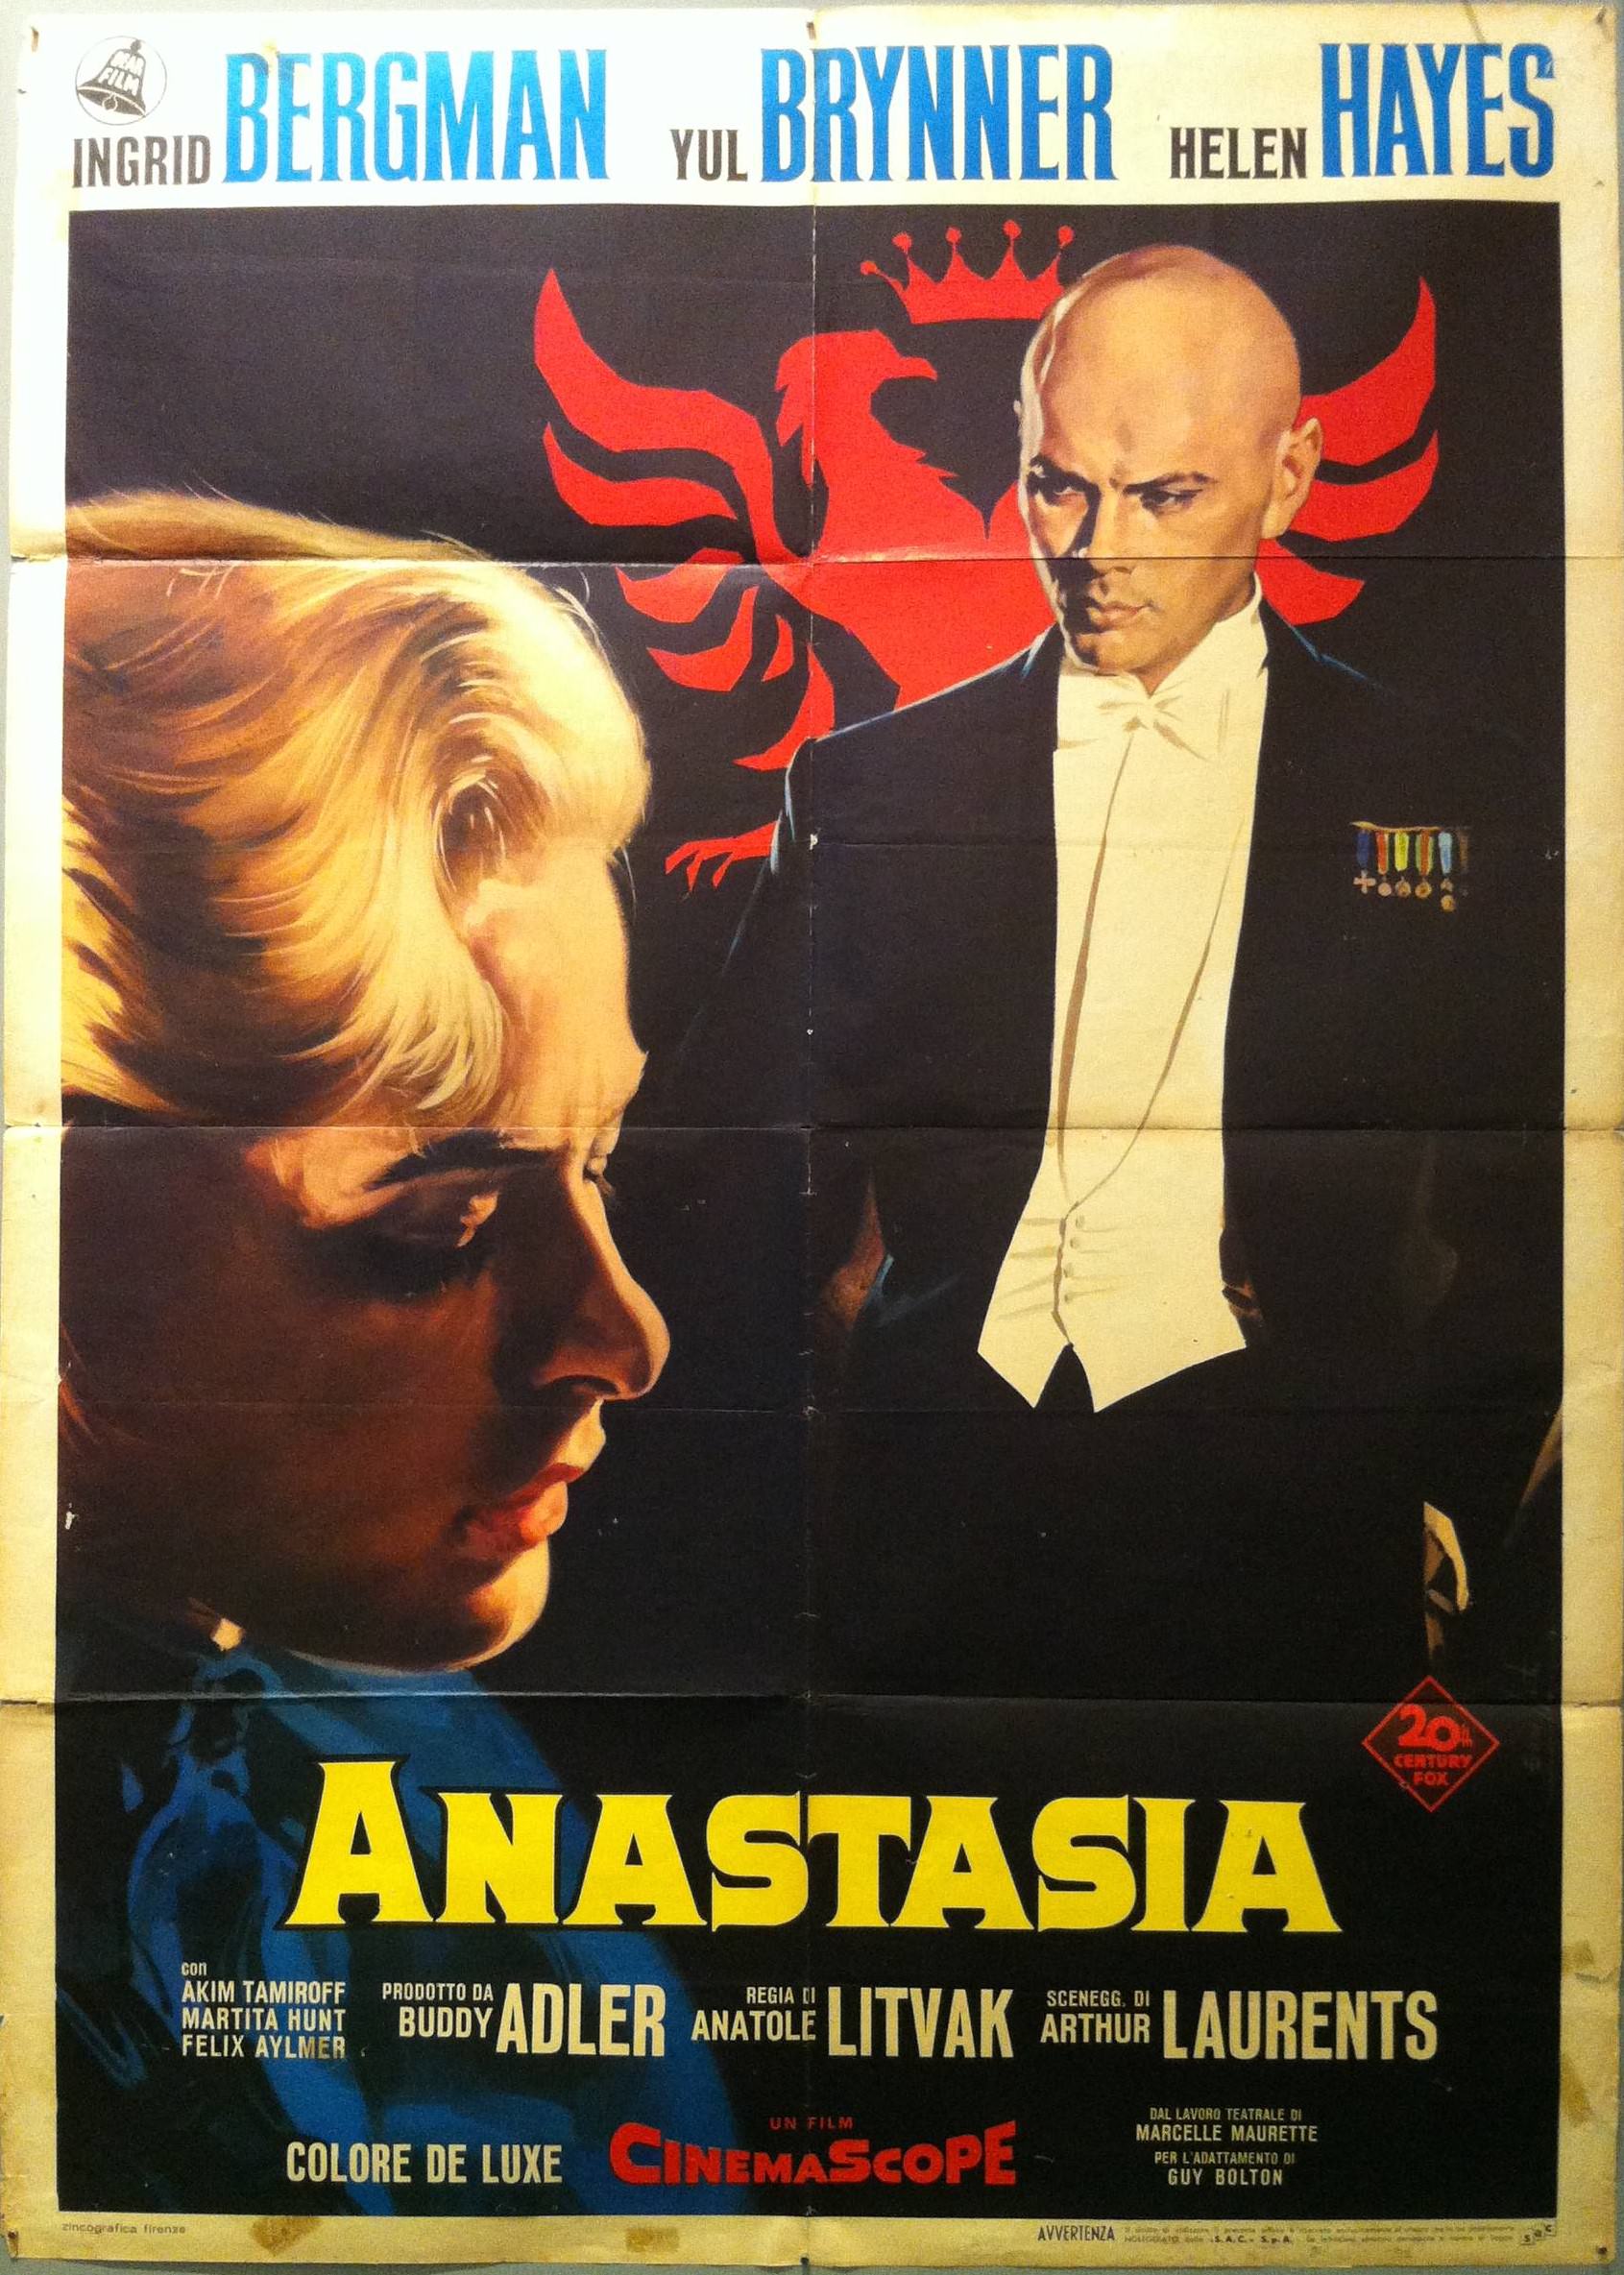 Italian film poster